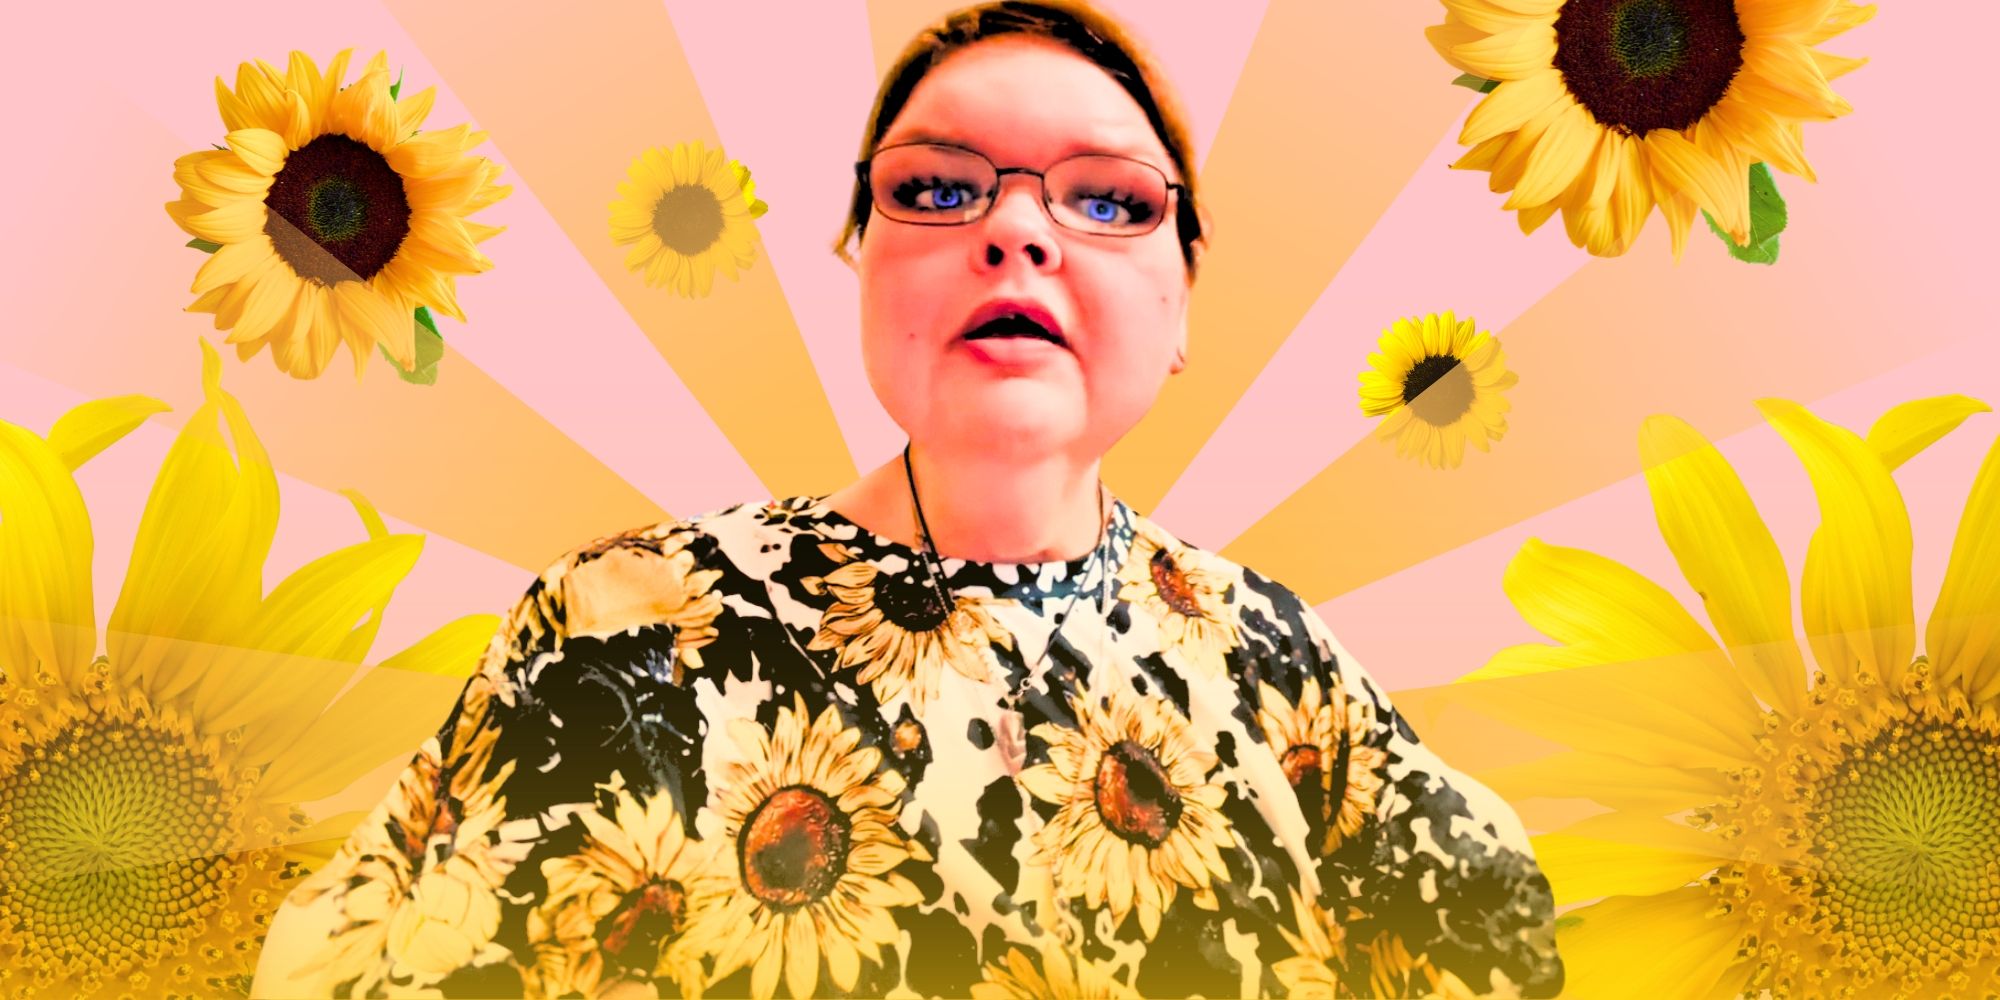 1000-Lb Sisters' Tammy Slaton with sunflower shirt and sun rays